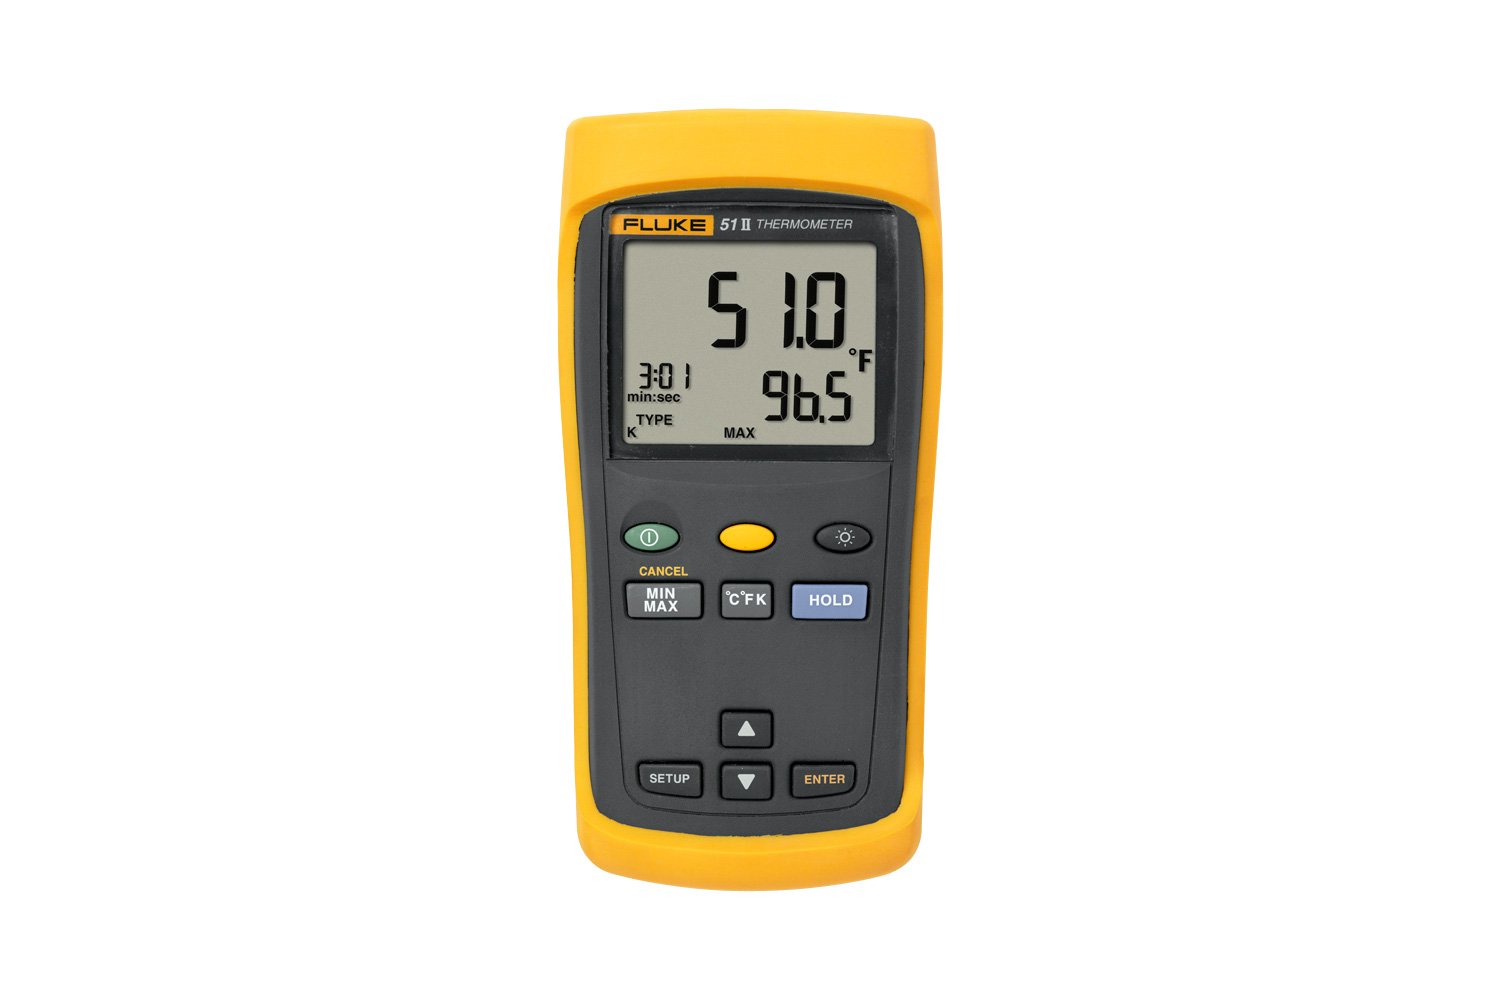 Handheld Digital Thermometer, Fluke 51 II